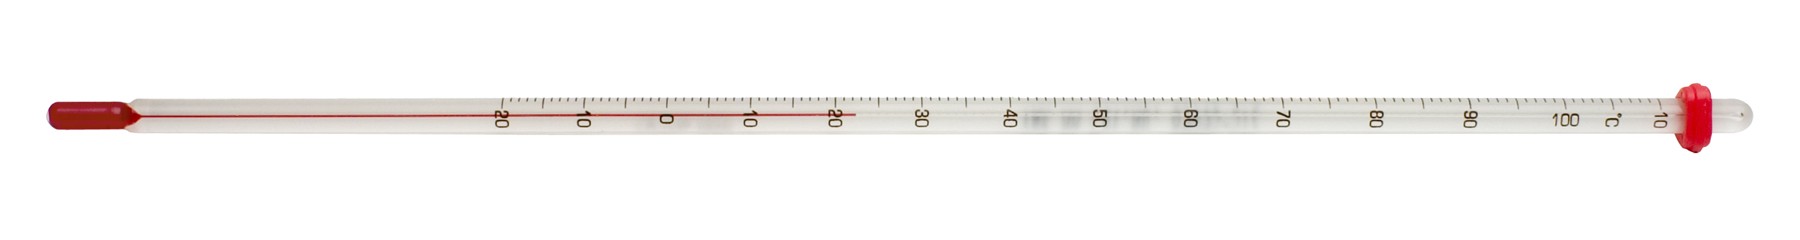 SP Bel-Art, H-B DURAC General Purpose Liquid-In-Glass Laboratory Thermometer; -20 to 150C, Total Immersion, Organic Liquid Fill